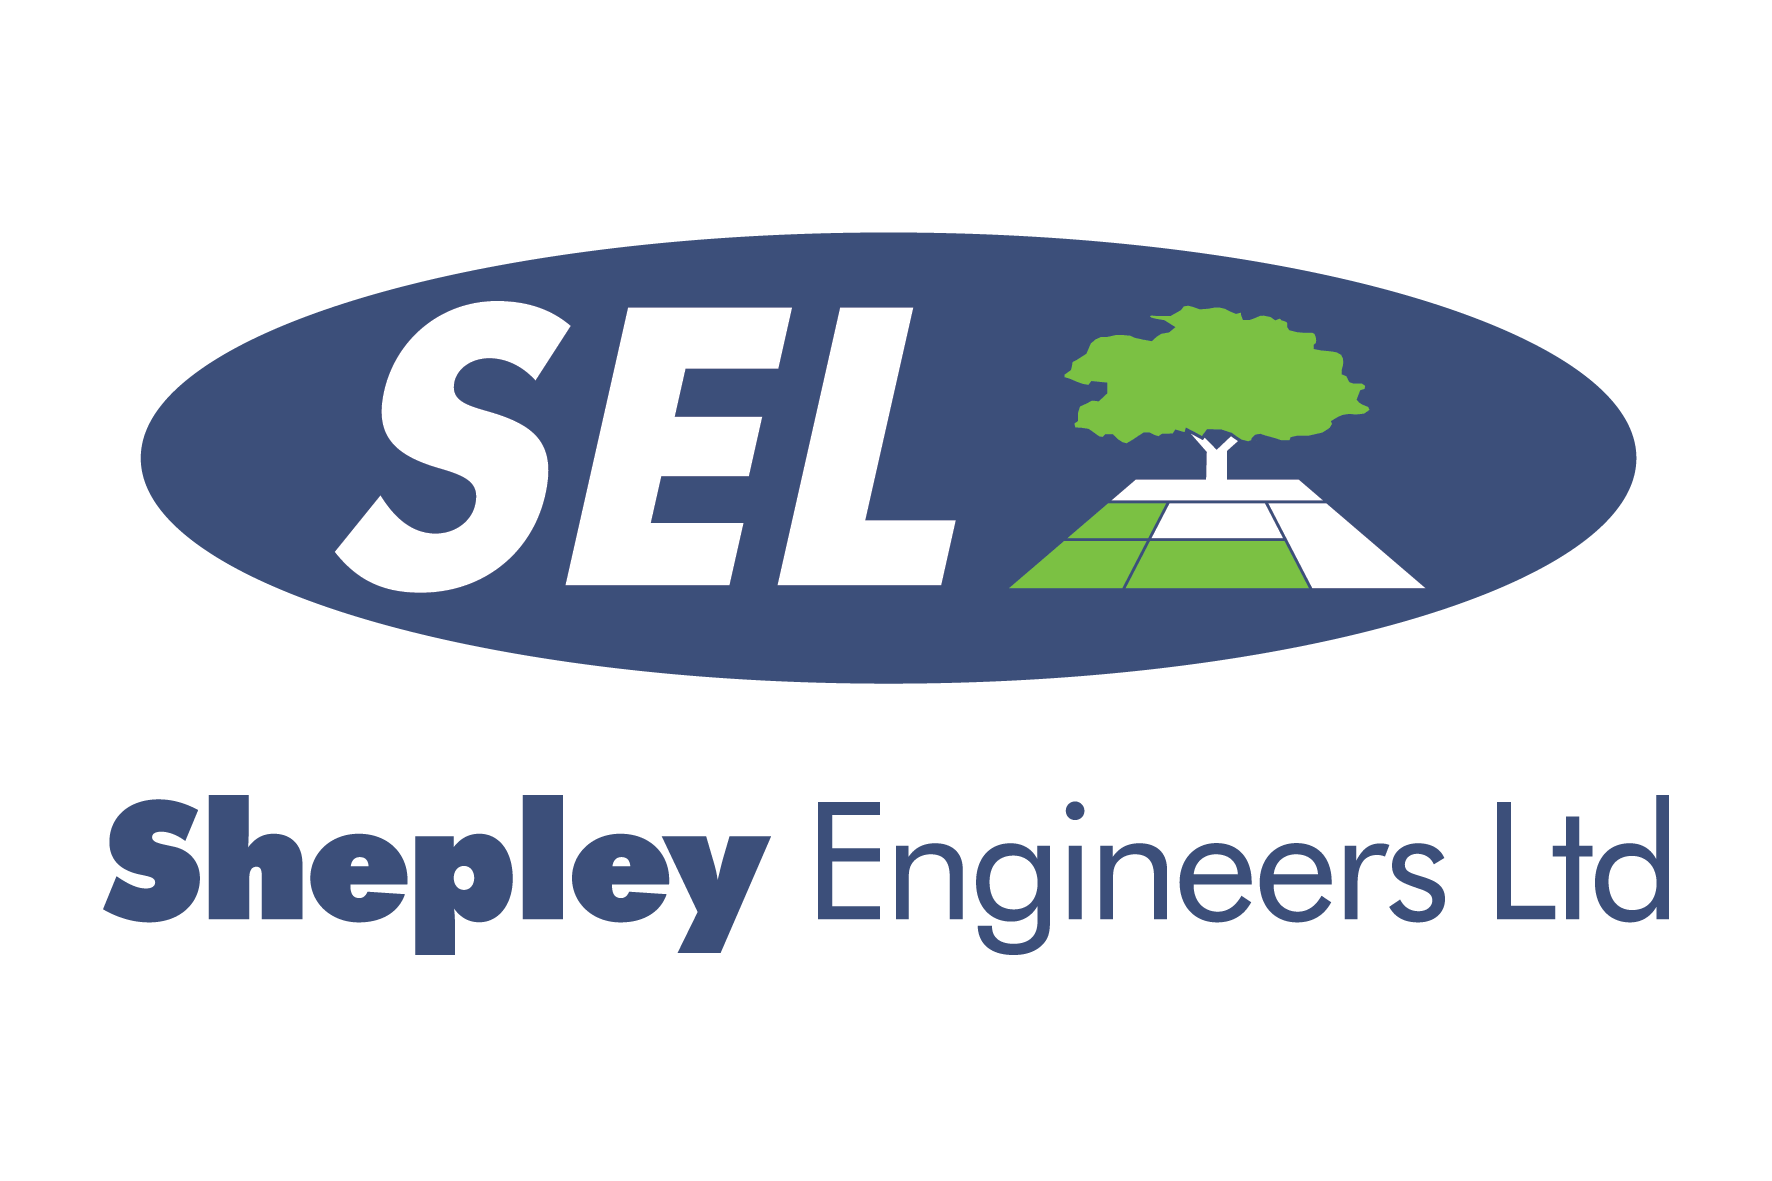 Shepley Logo